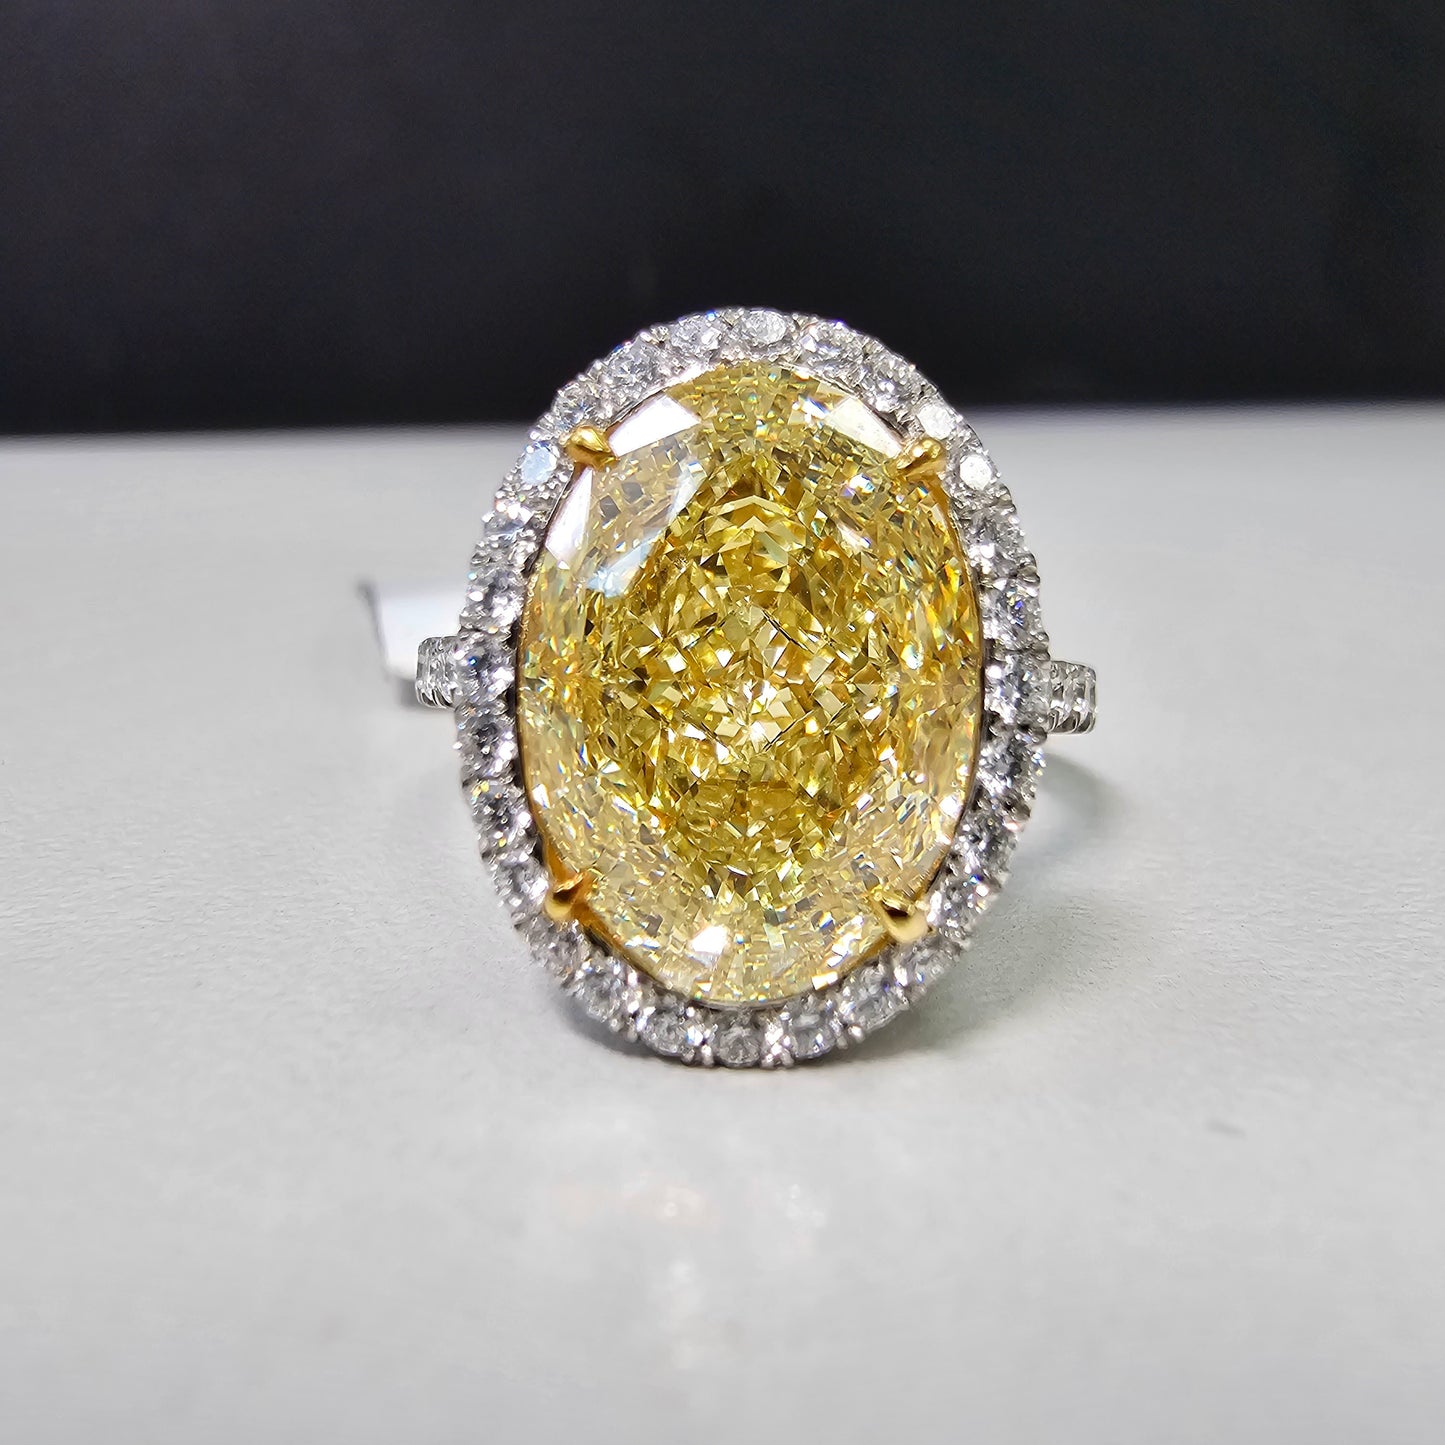 6 carat fancy light yellow diamond oval halo ring, yellow diamond engagement ring